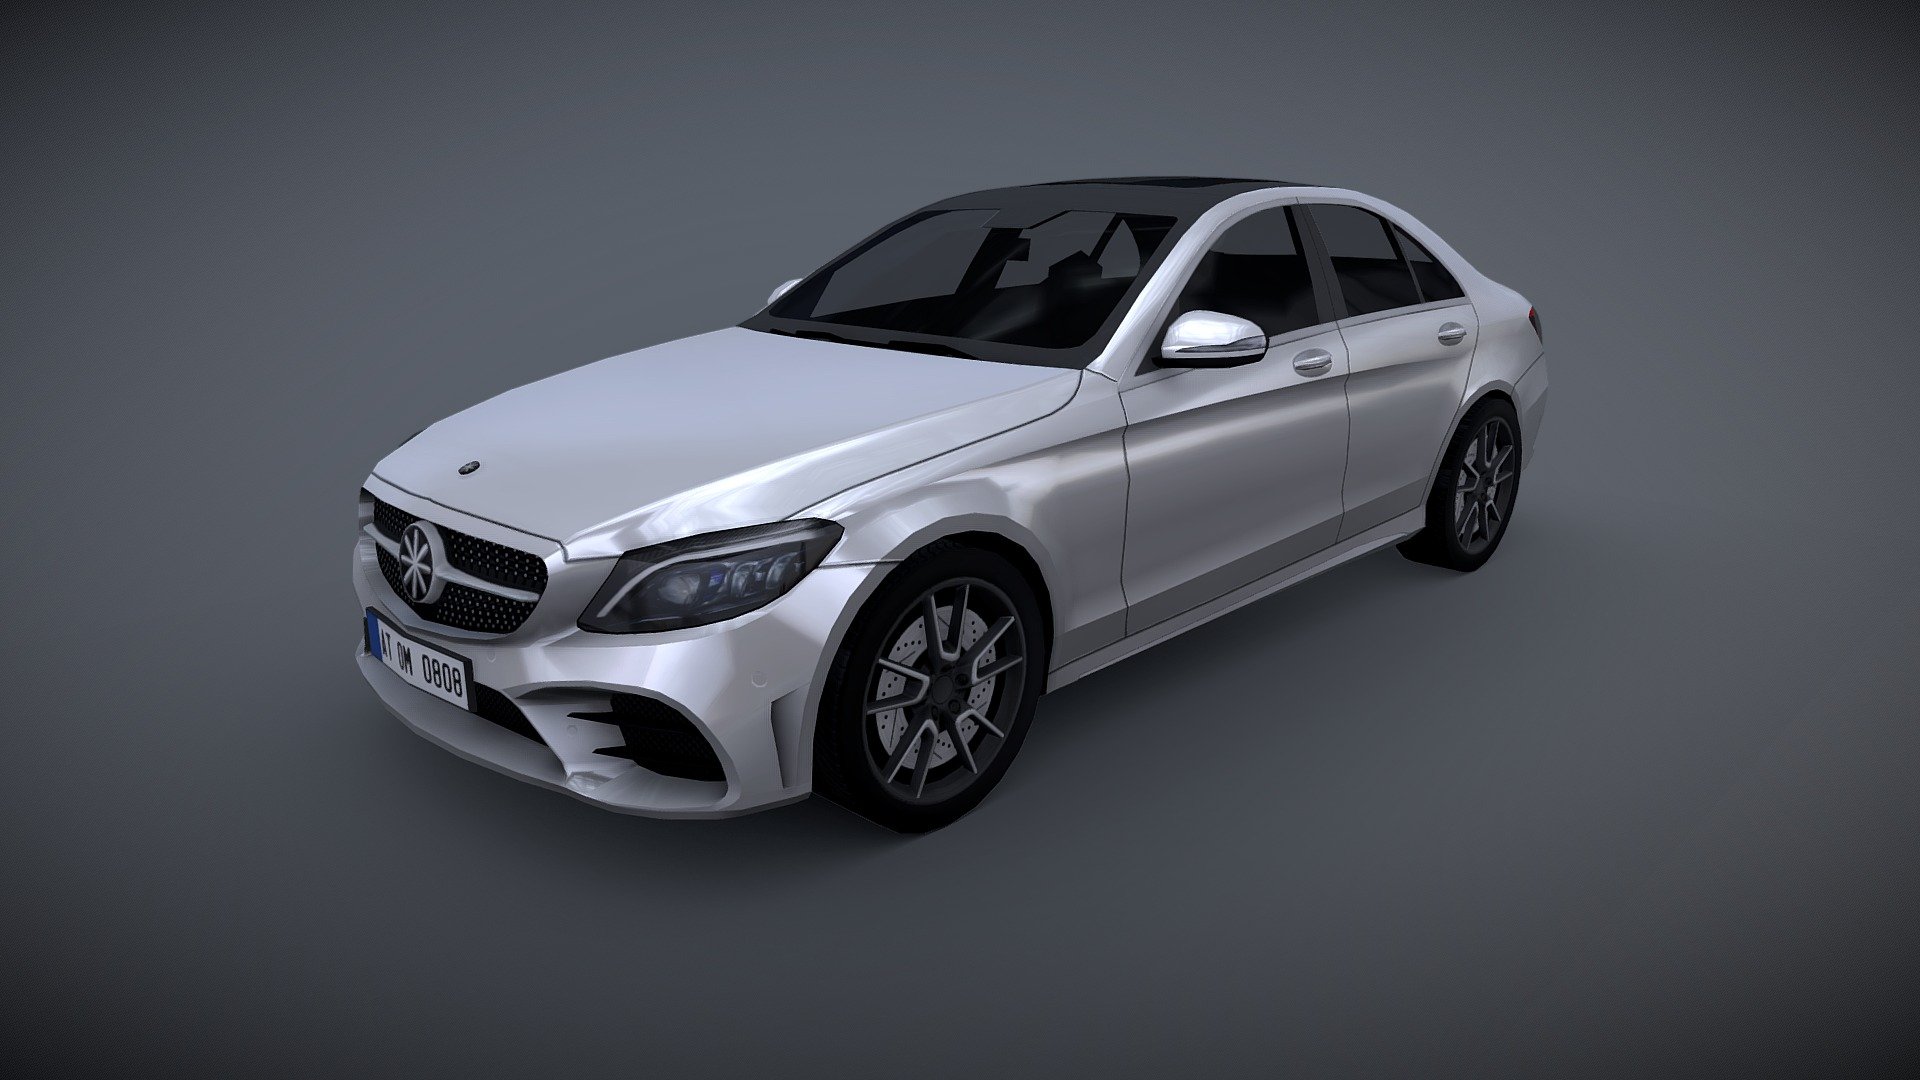 3,625 Mercedes Benz C Class Images, Stock Photos, 3D objects